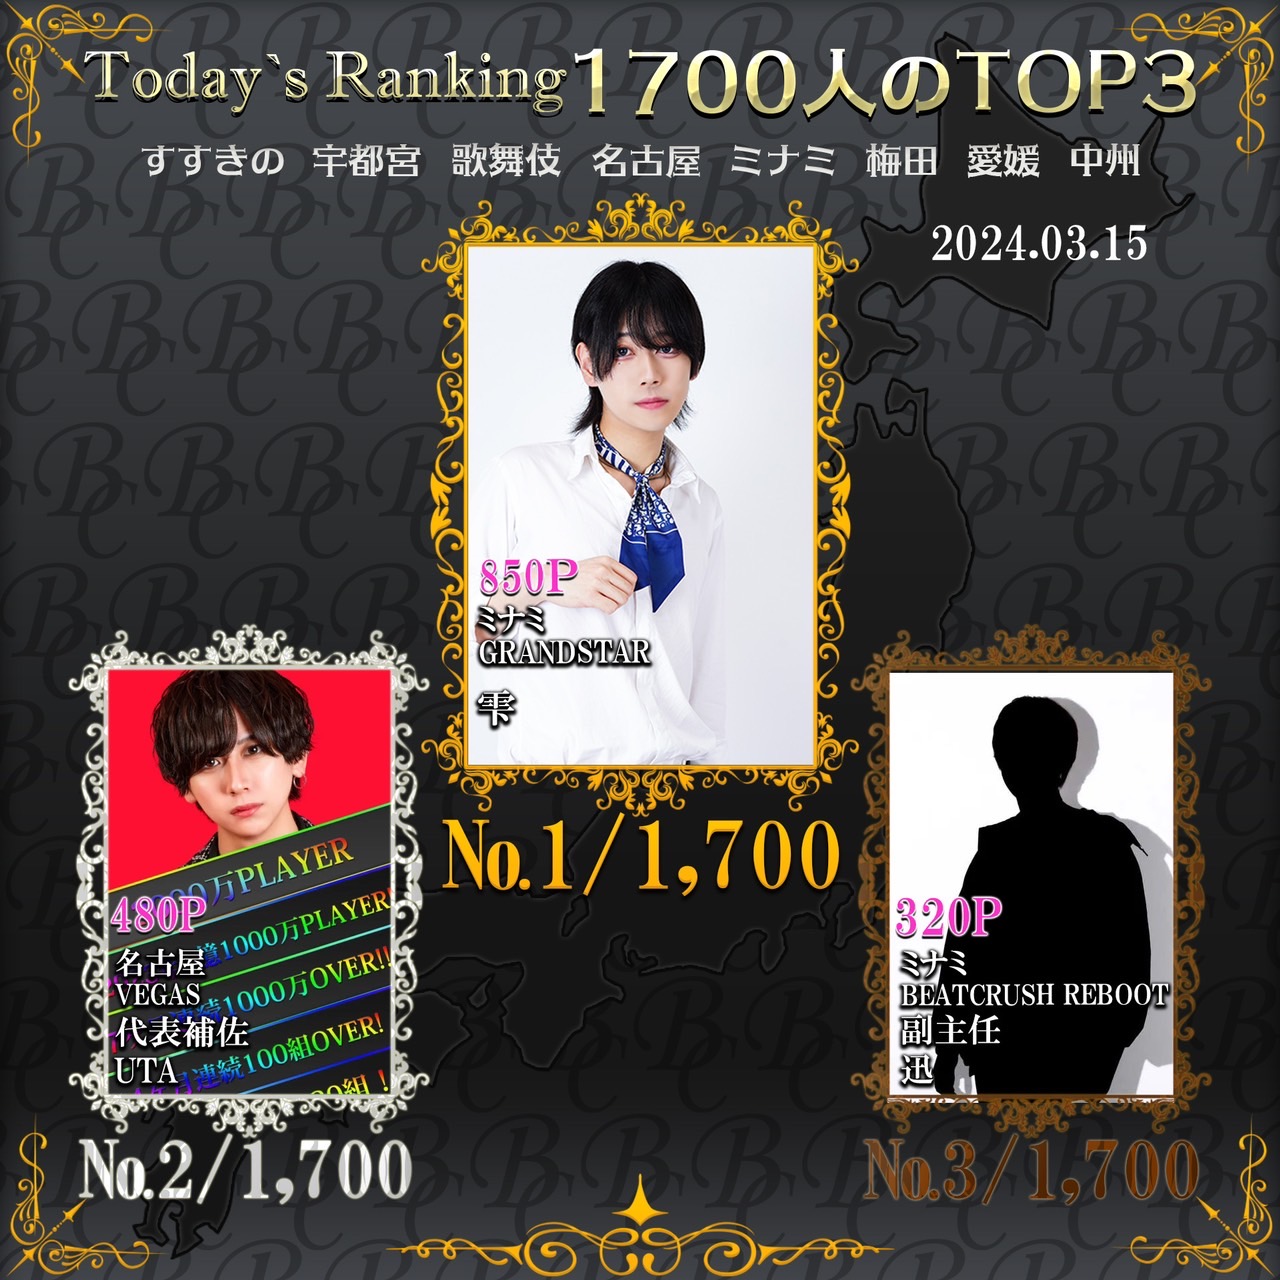 3/15 Today’s Ranking